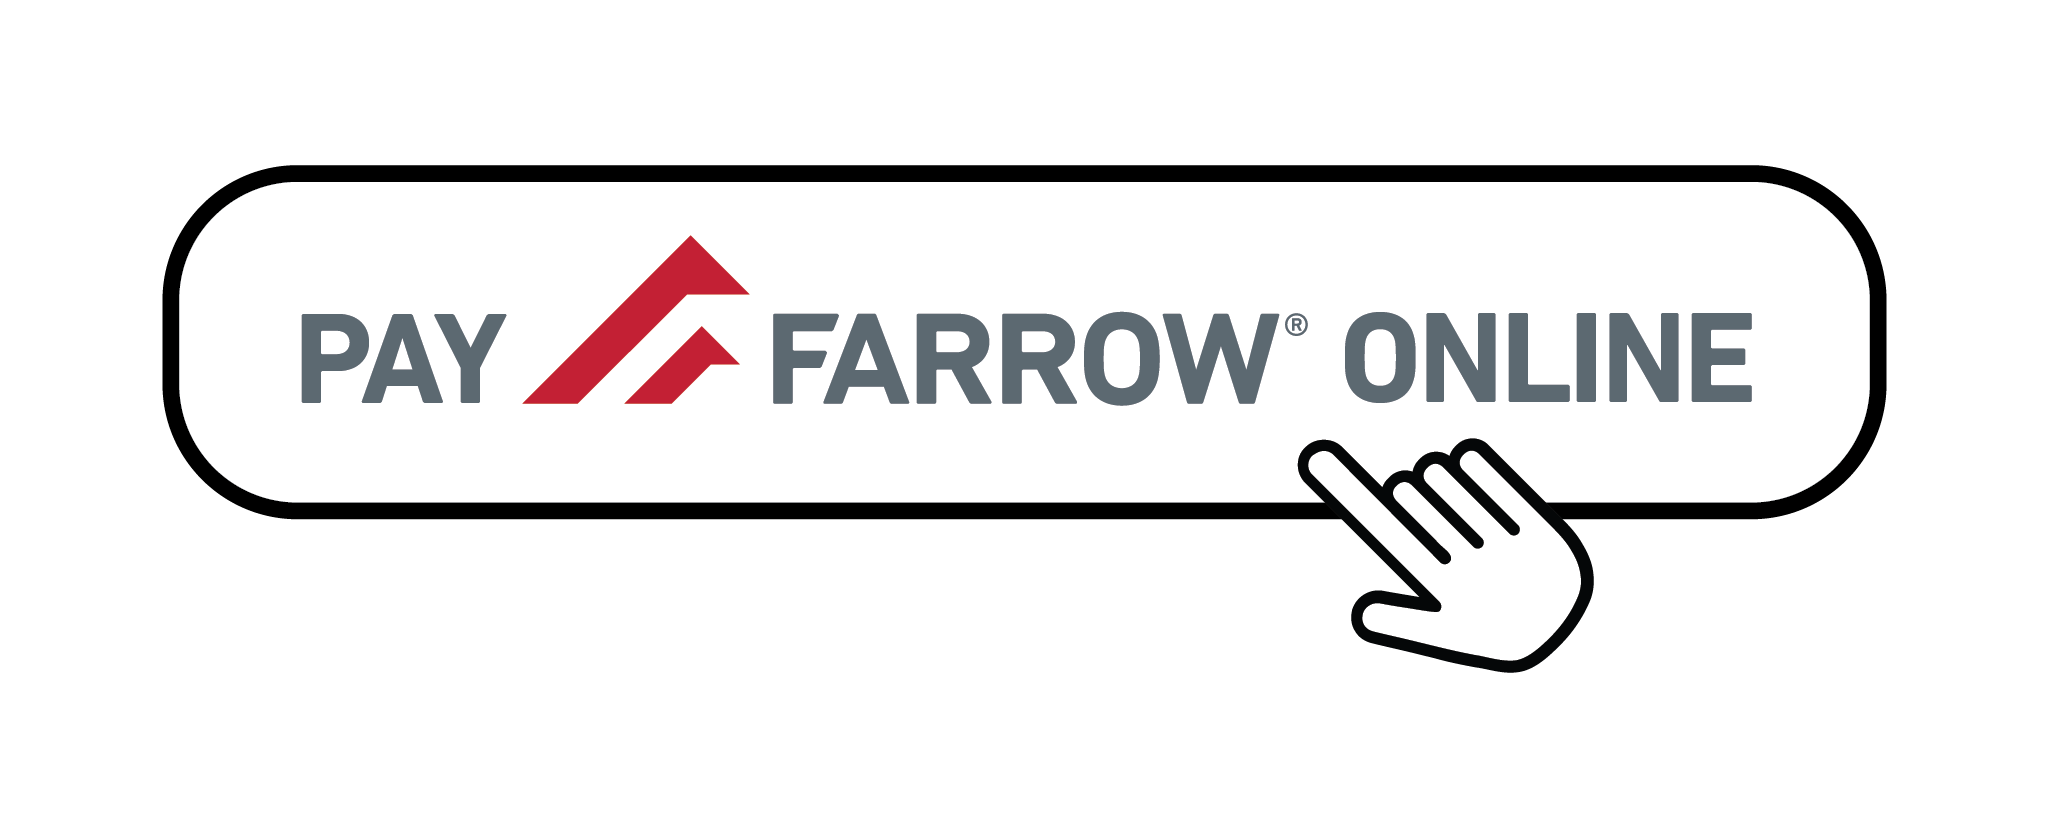 pay farrow online button